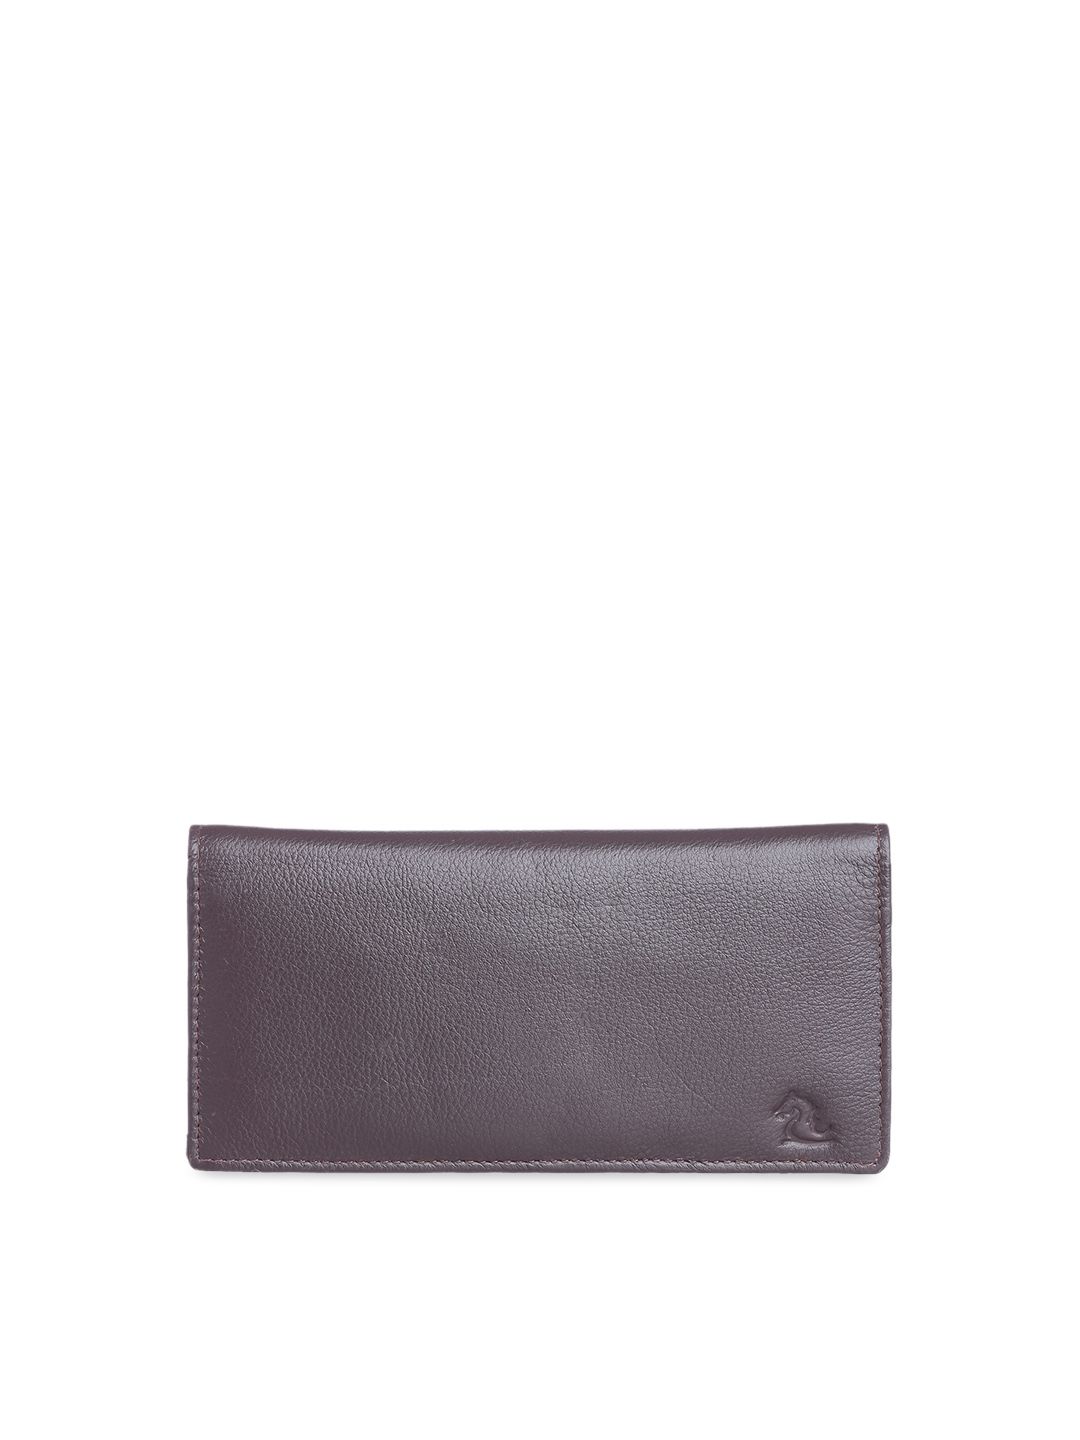 Kara Women Brown Solid Leather Envelope Price in India